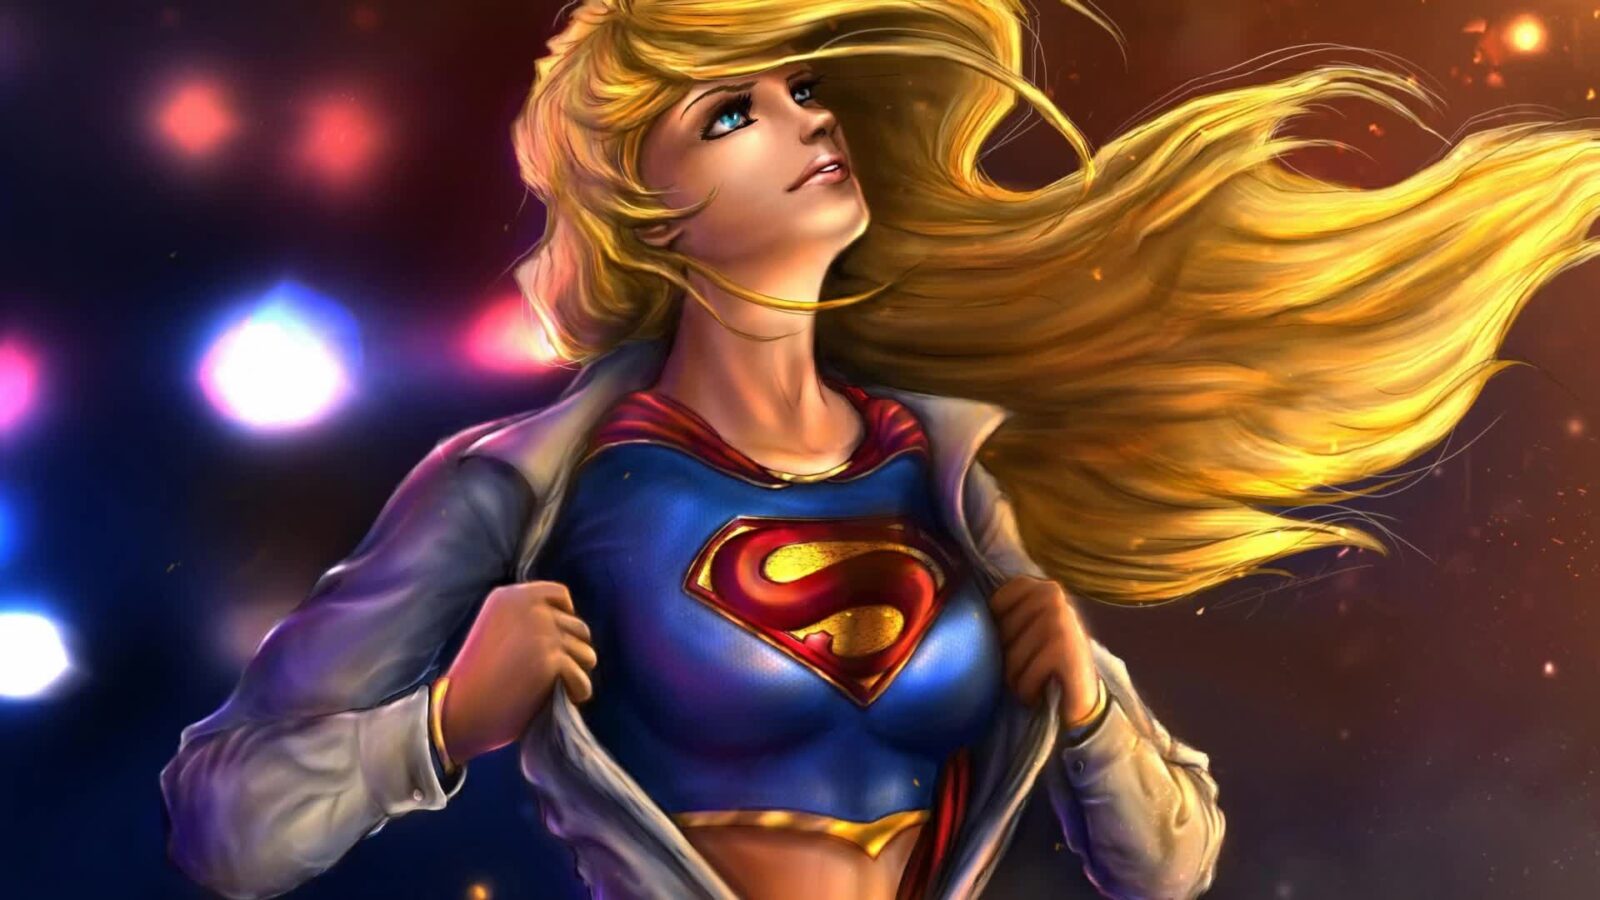 Beautiful Blonde Supergirl Artwork - Free Animated ...